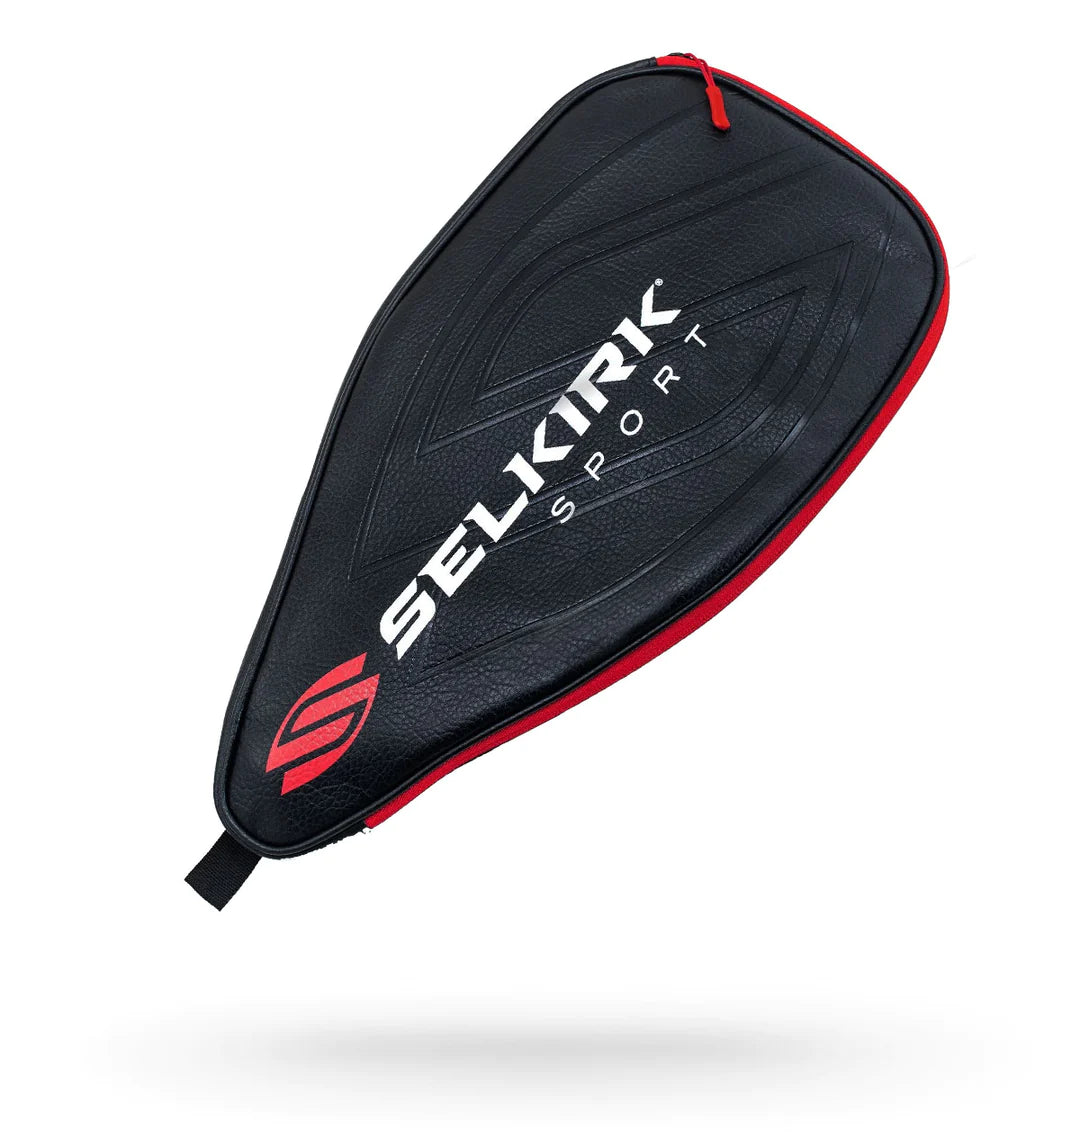 Selkirk- premium paddle case